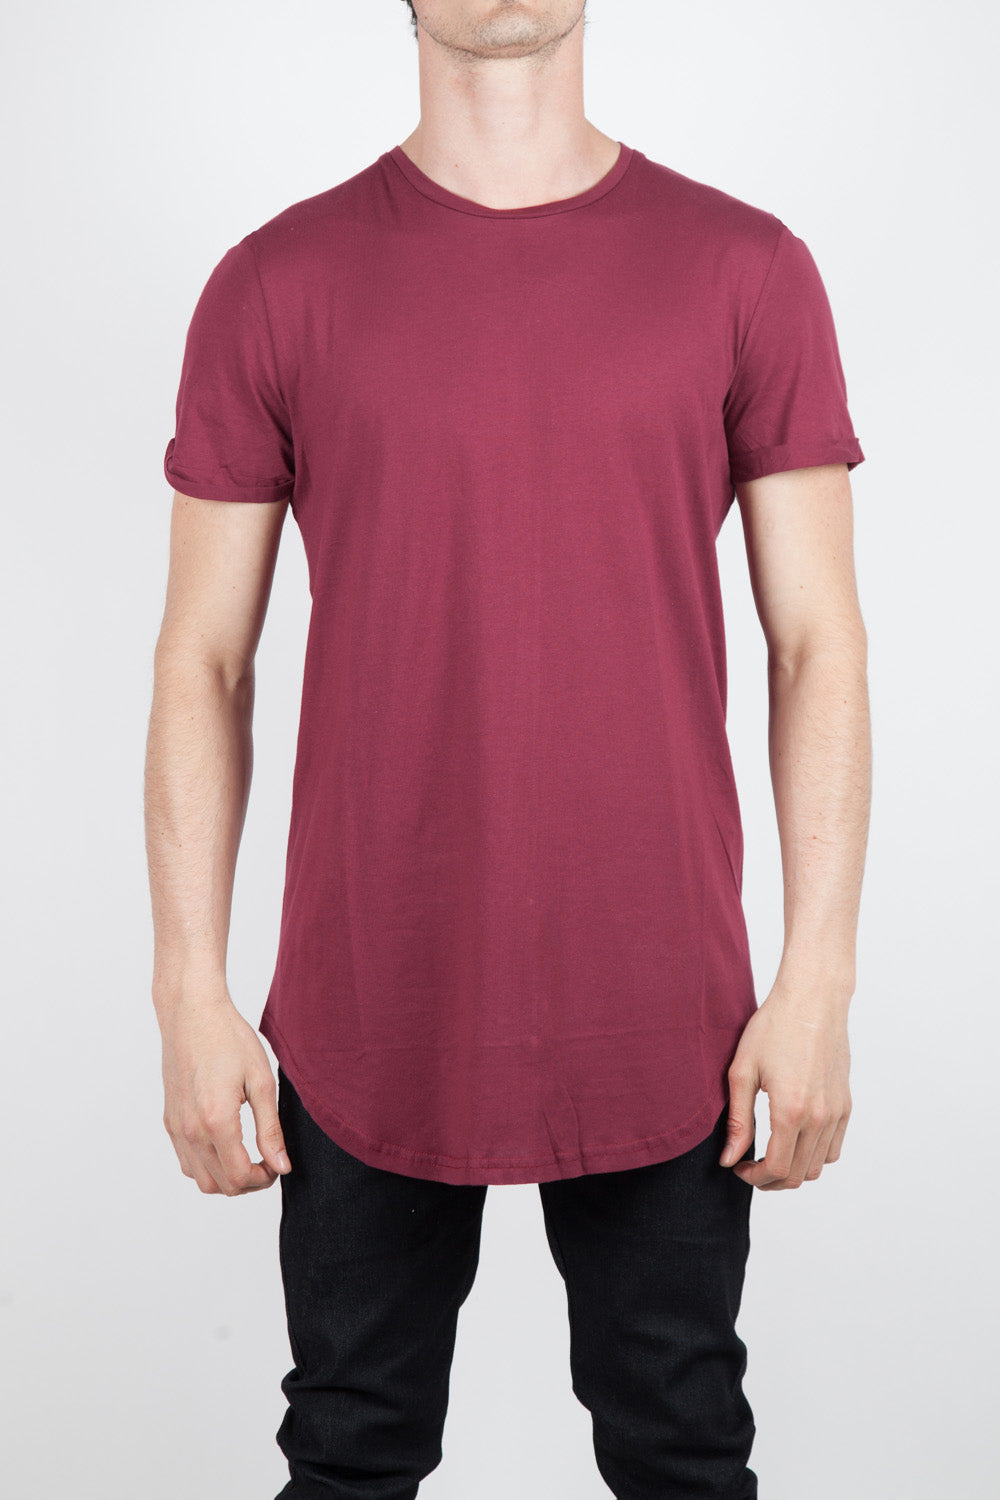 Sixth June - T-shirt oversize zip bordeaux 1146C